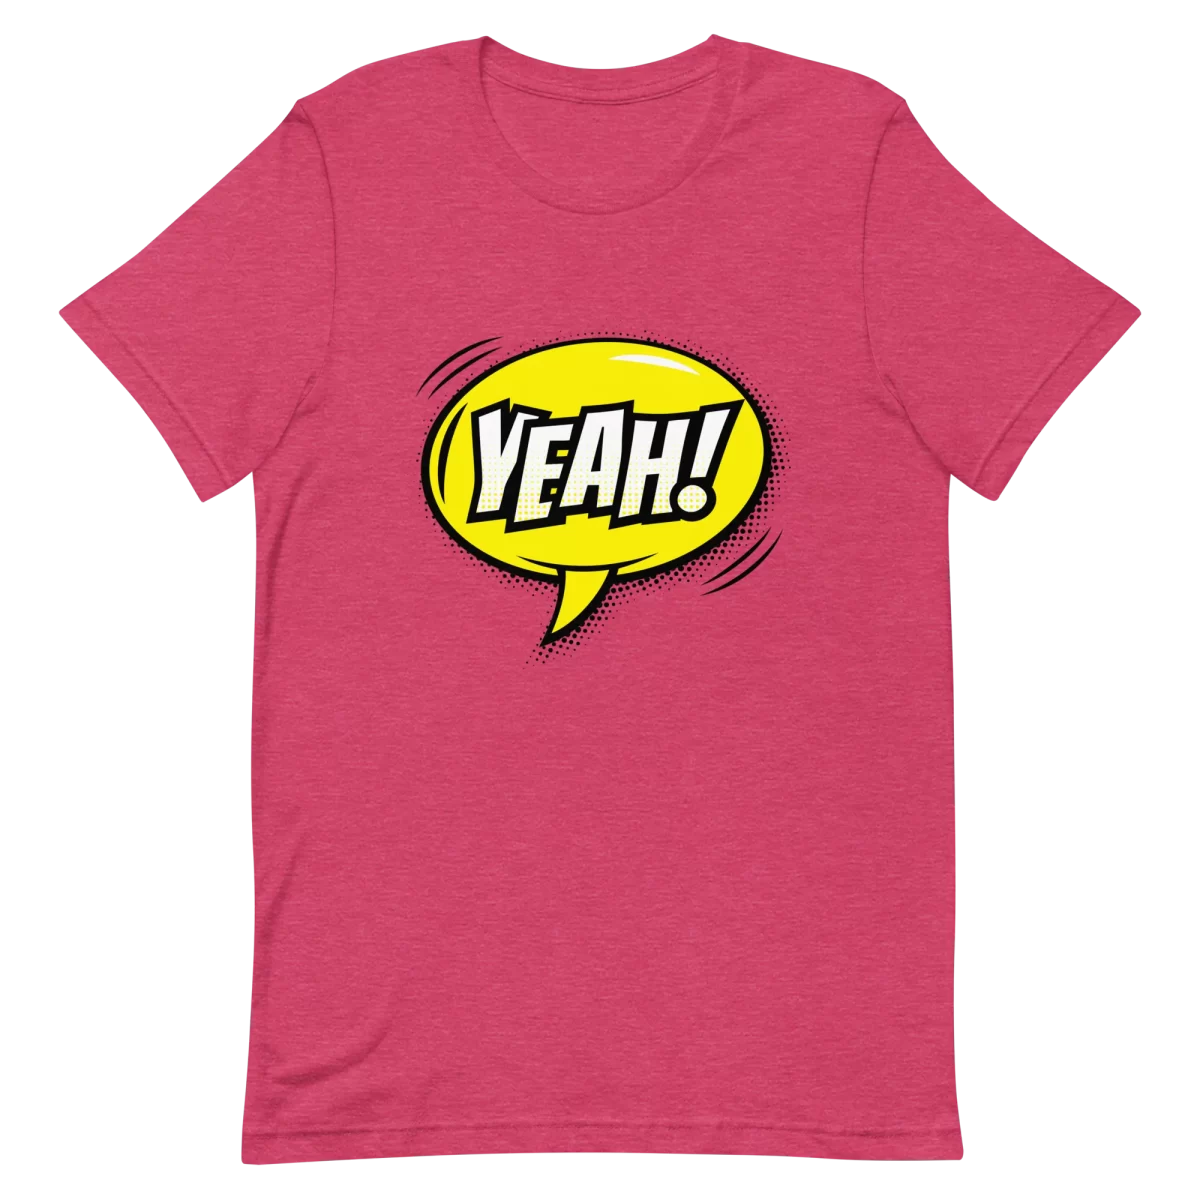 Unisex T-Shirt - YEAH! - Heather Raspberry